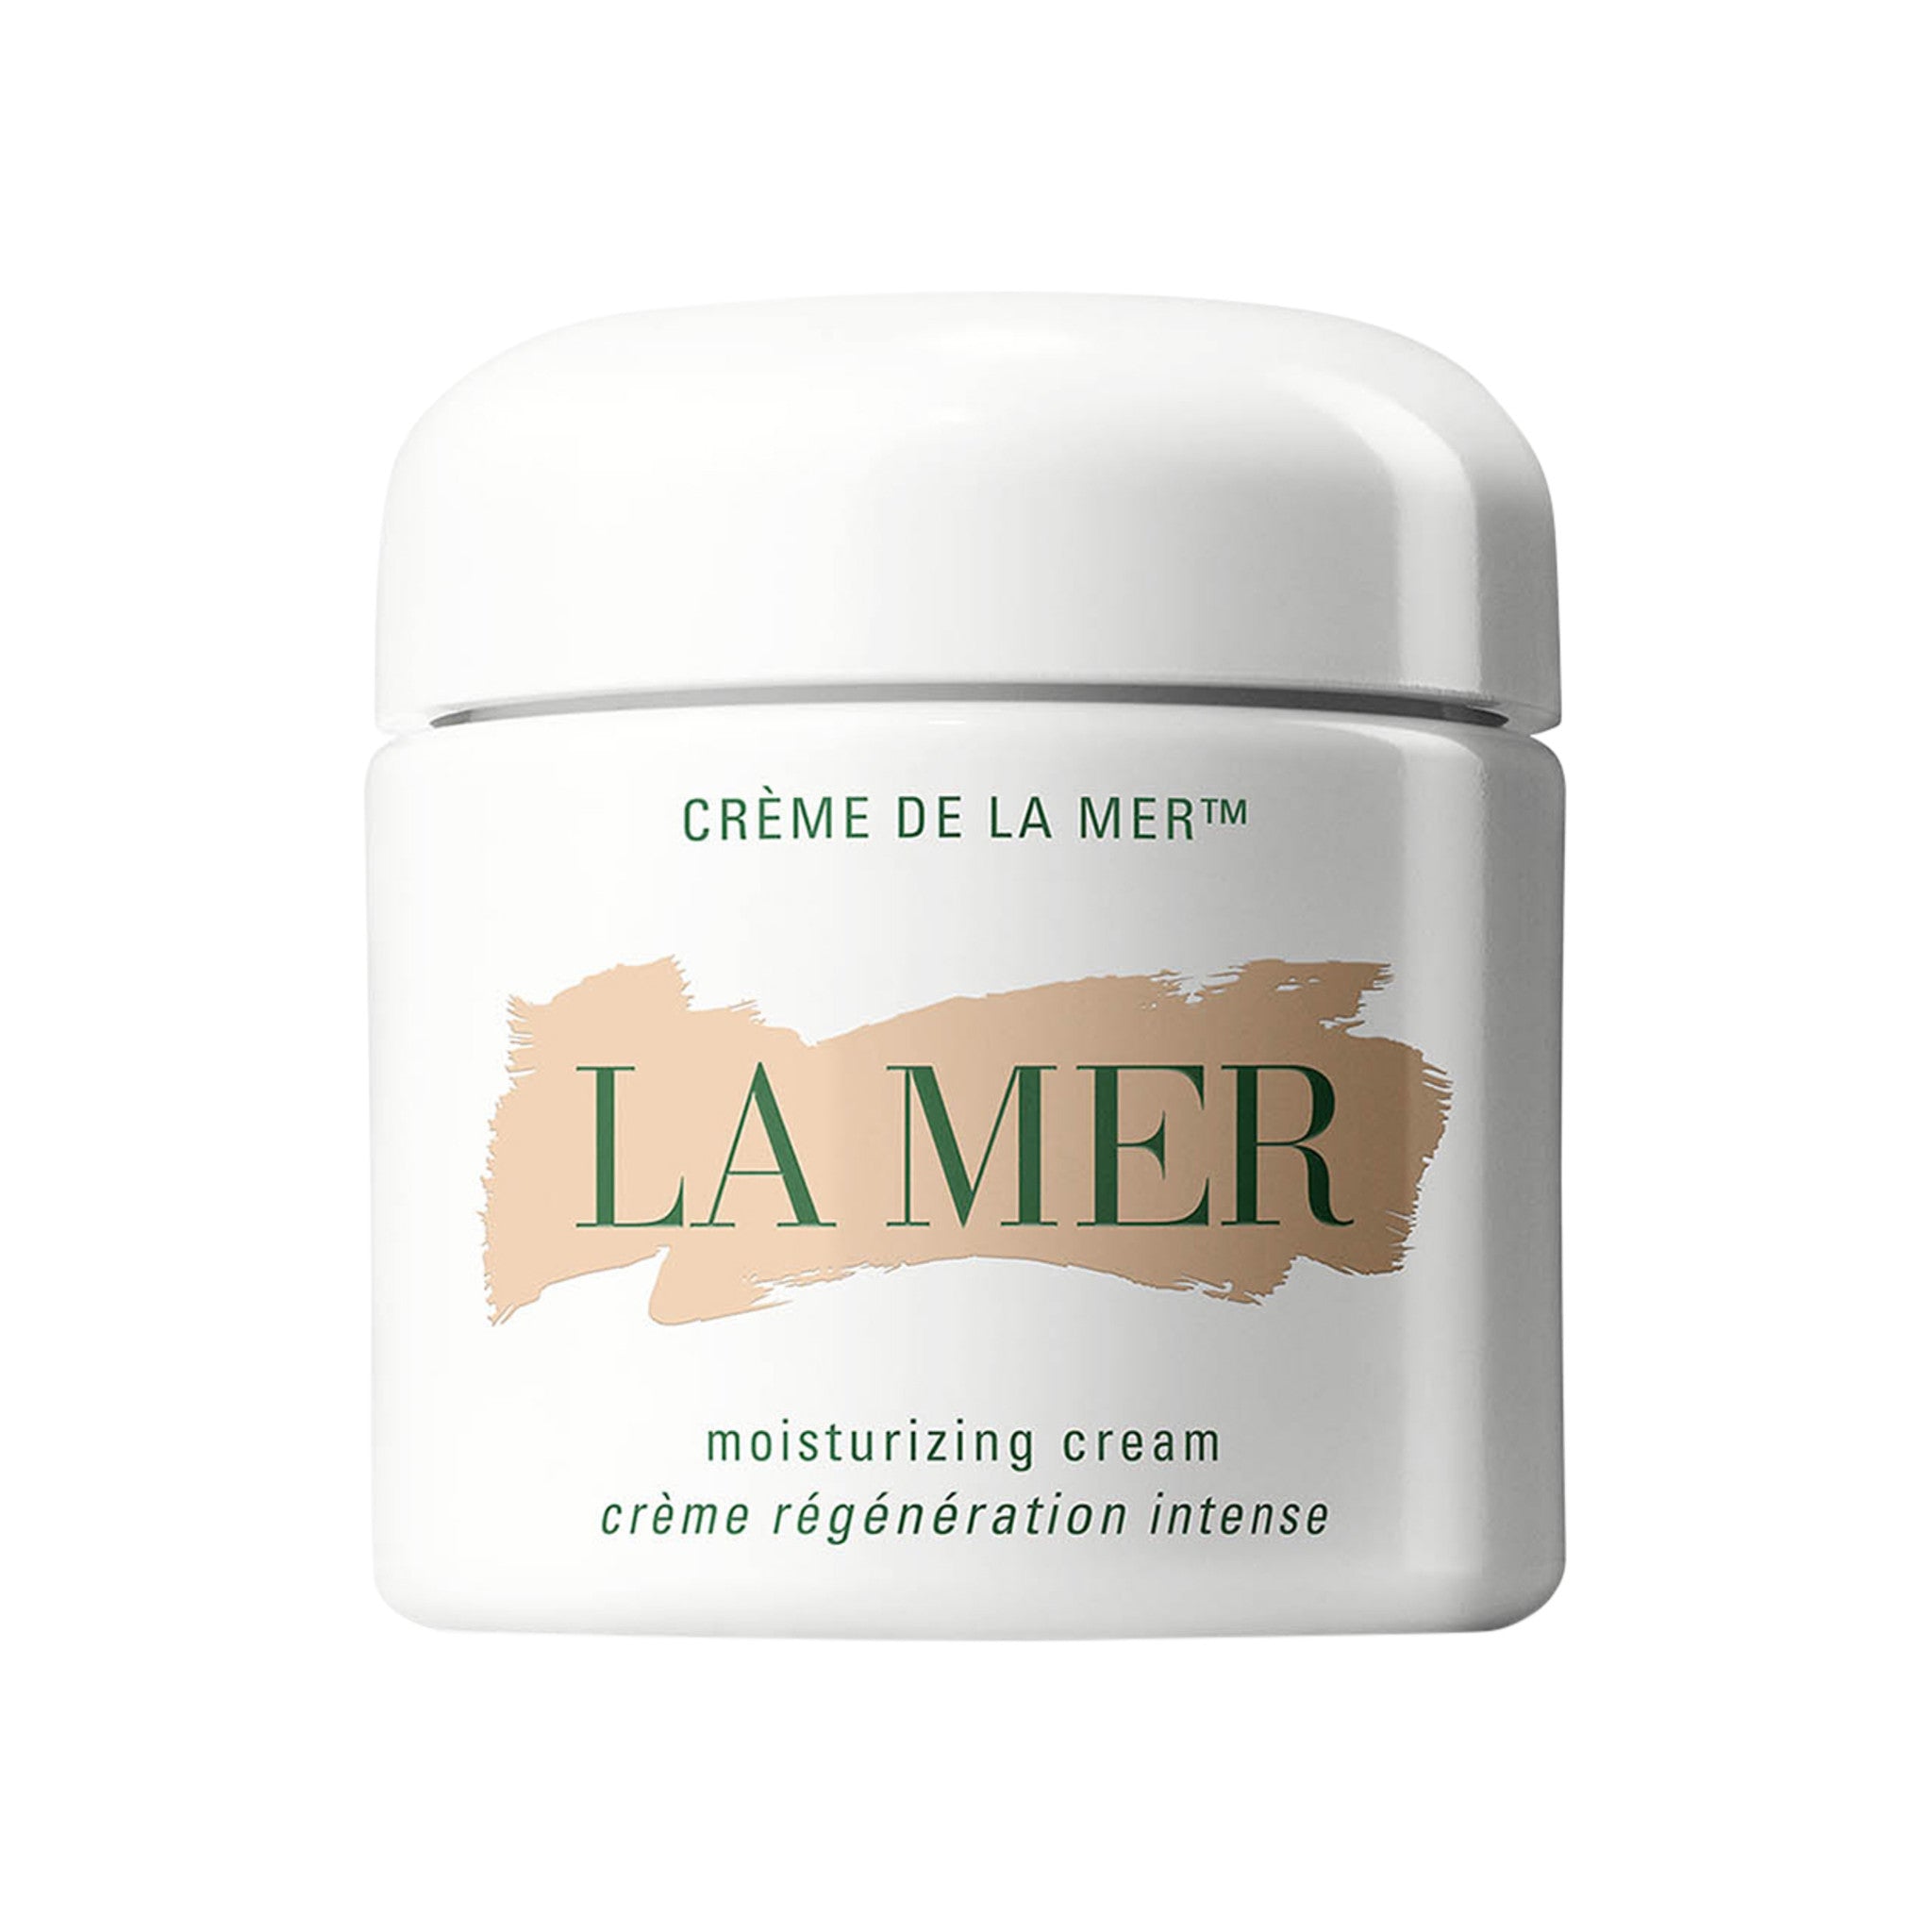 La Mer Crème de La Mer Face Cream Size variant: 3.4 oz. main image.